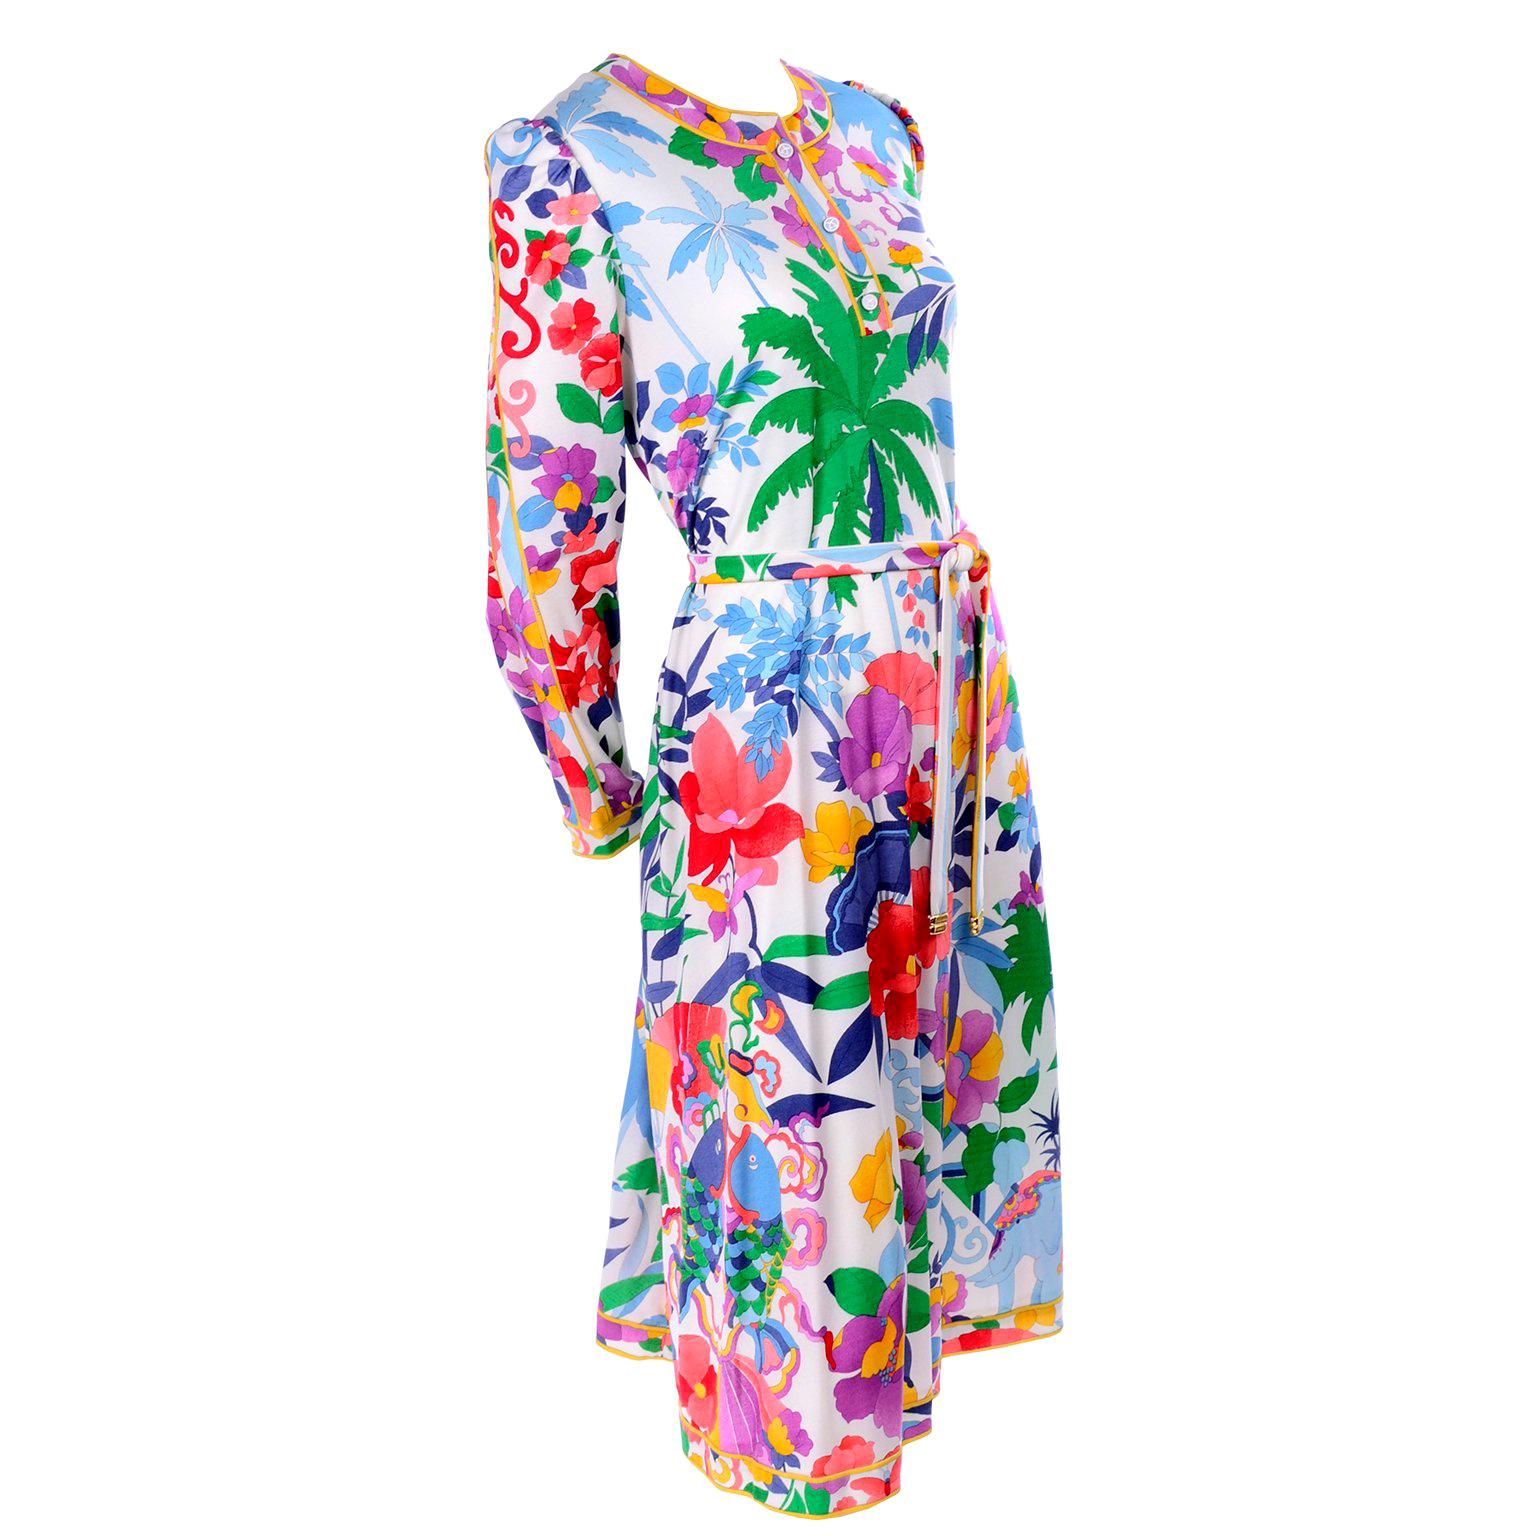 Leonard Vintage Dress in Tropical Floral Fish Elephant Print Silk Jersey